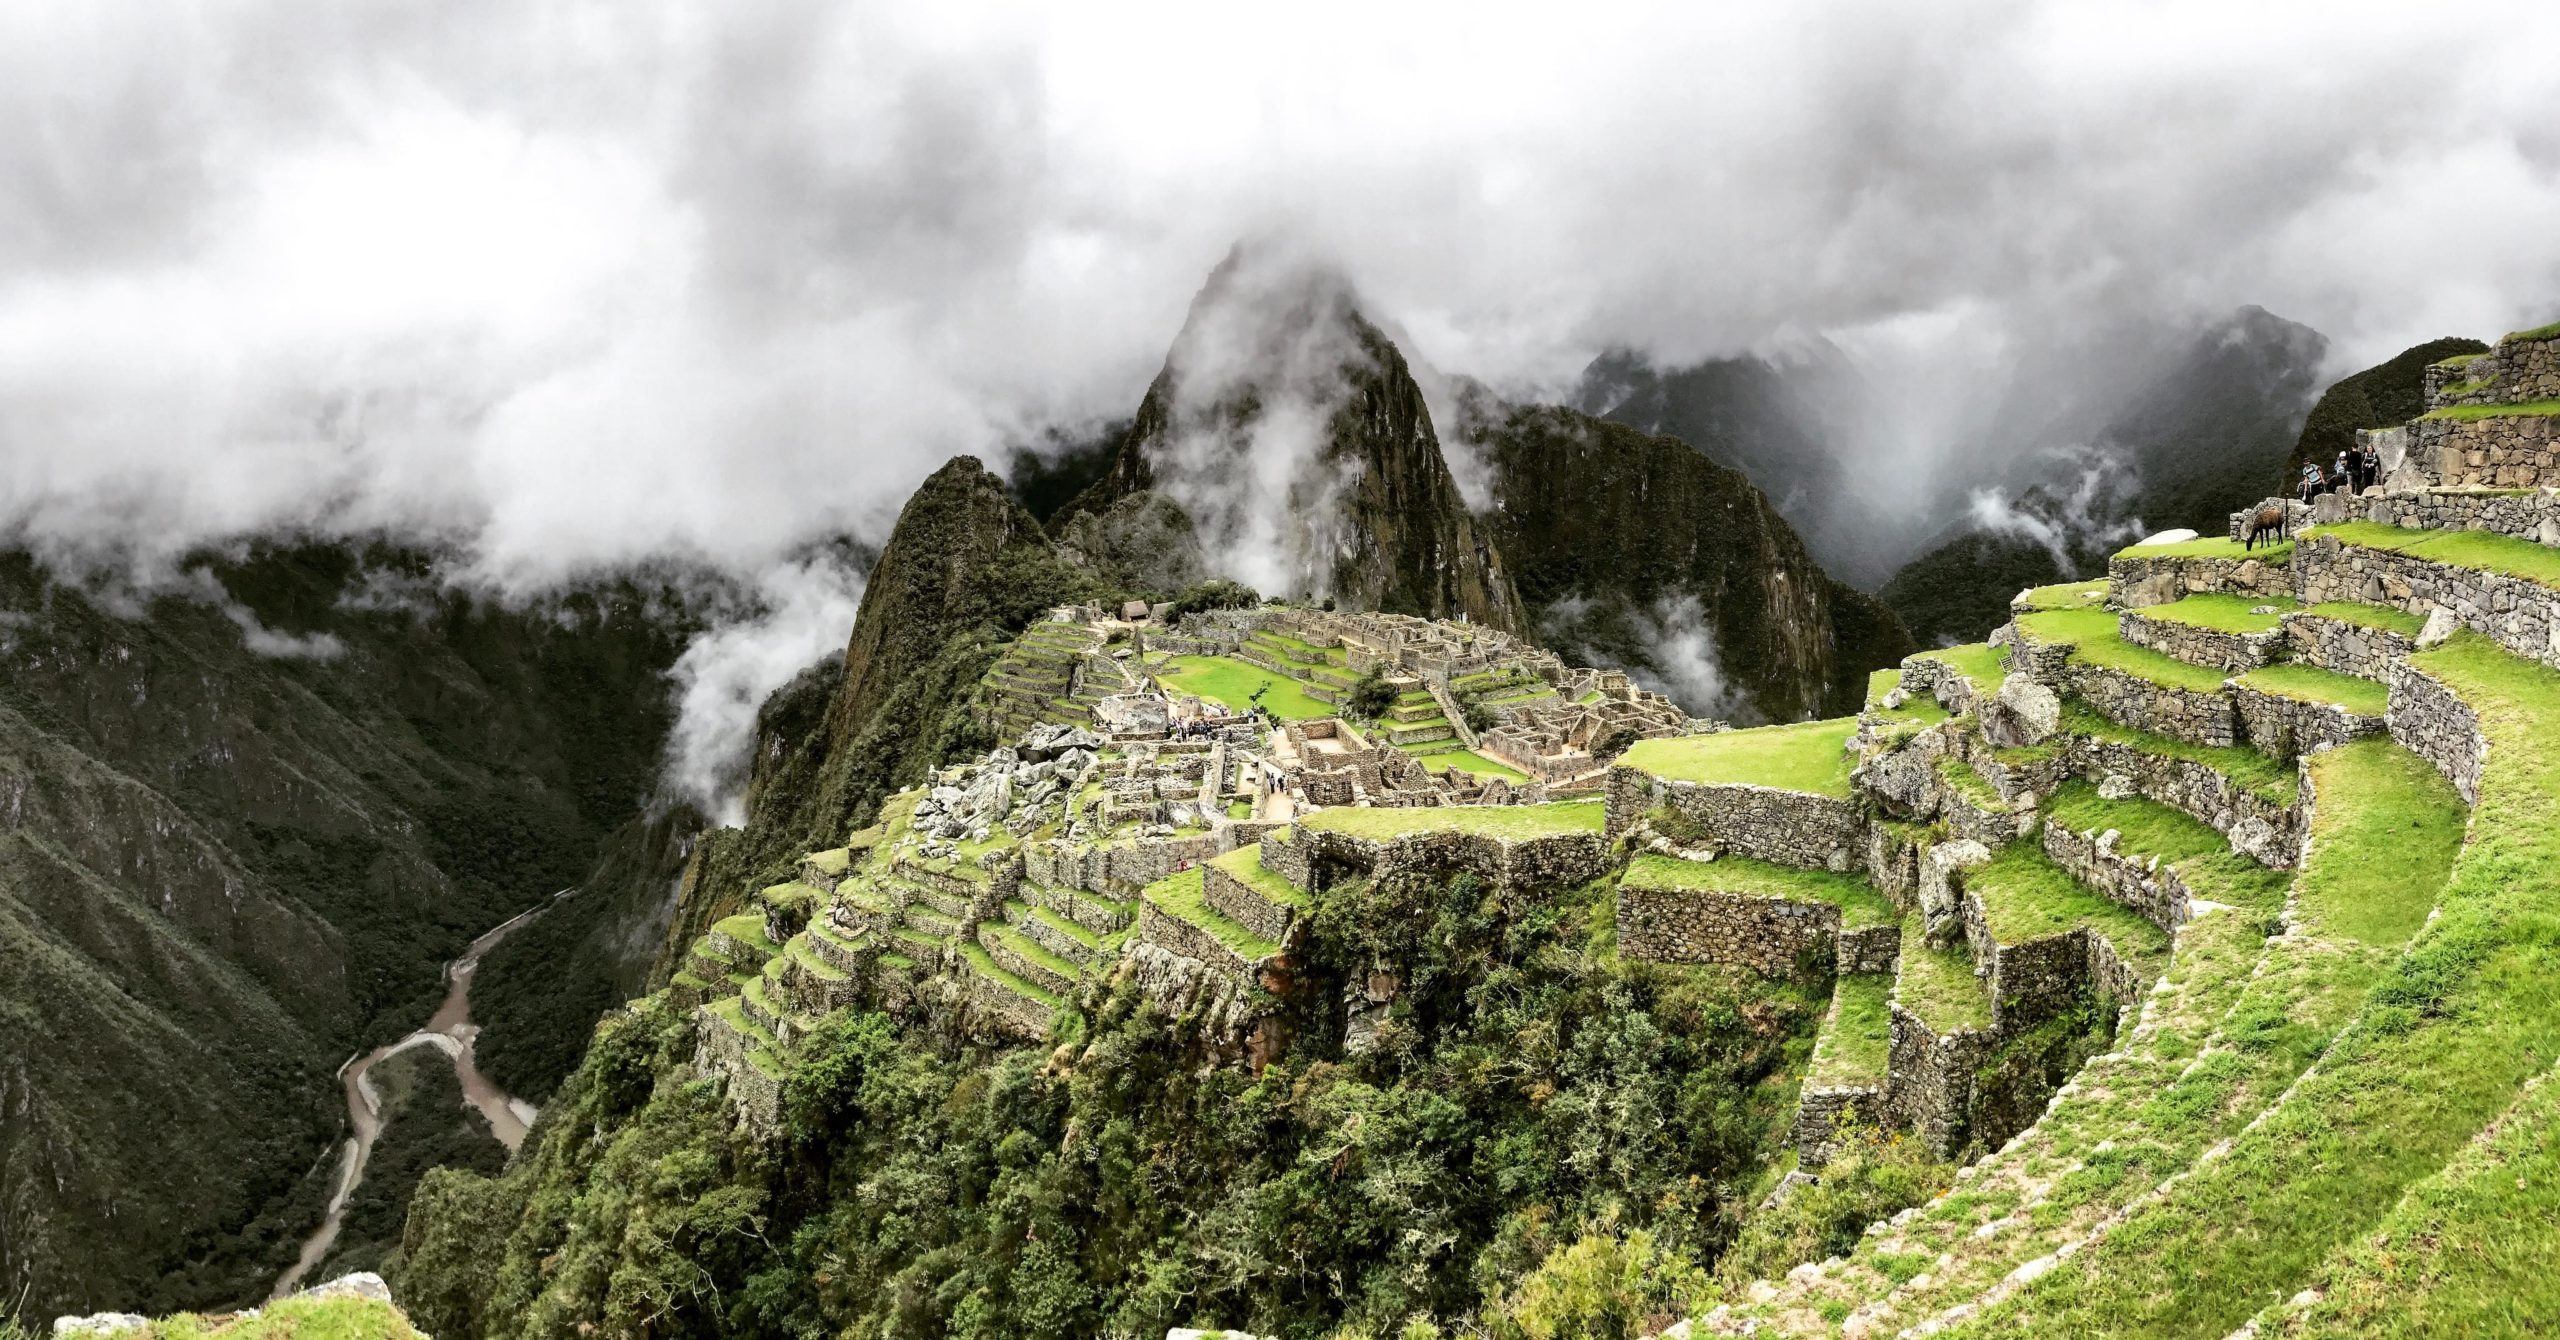 Photo by Jeremiah Berman. Tourist guide to visiting Machu Picchu.